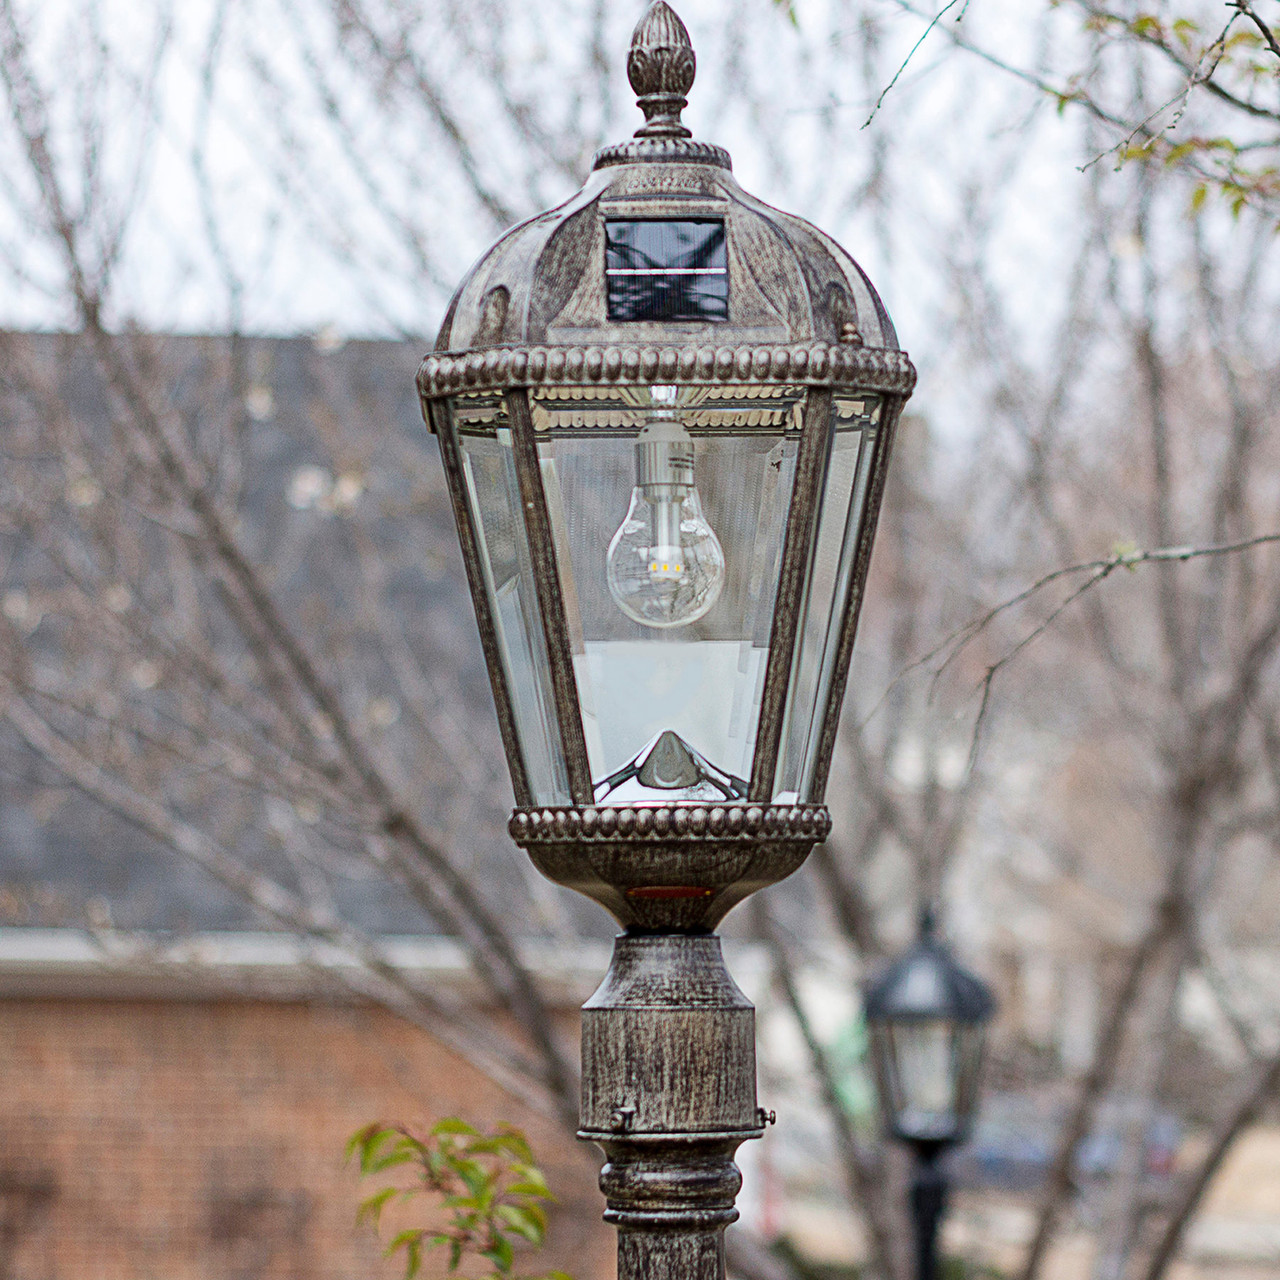 Adolescent zondaar Postcode Solar Lamp Post Light | Royal Solar Carriage Lantern Black or Bronze